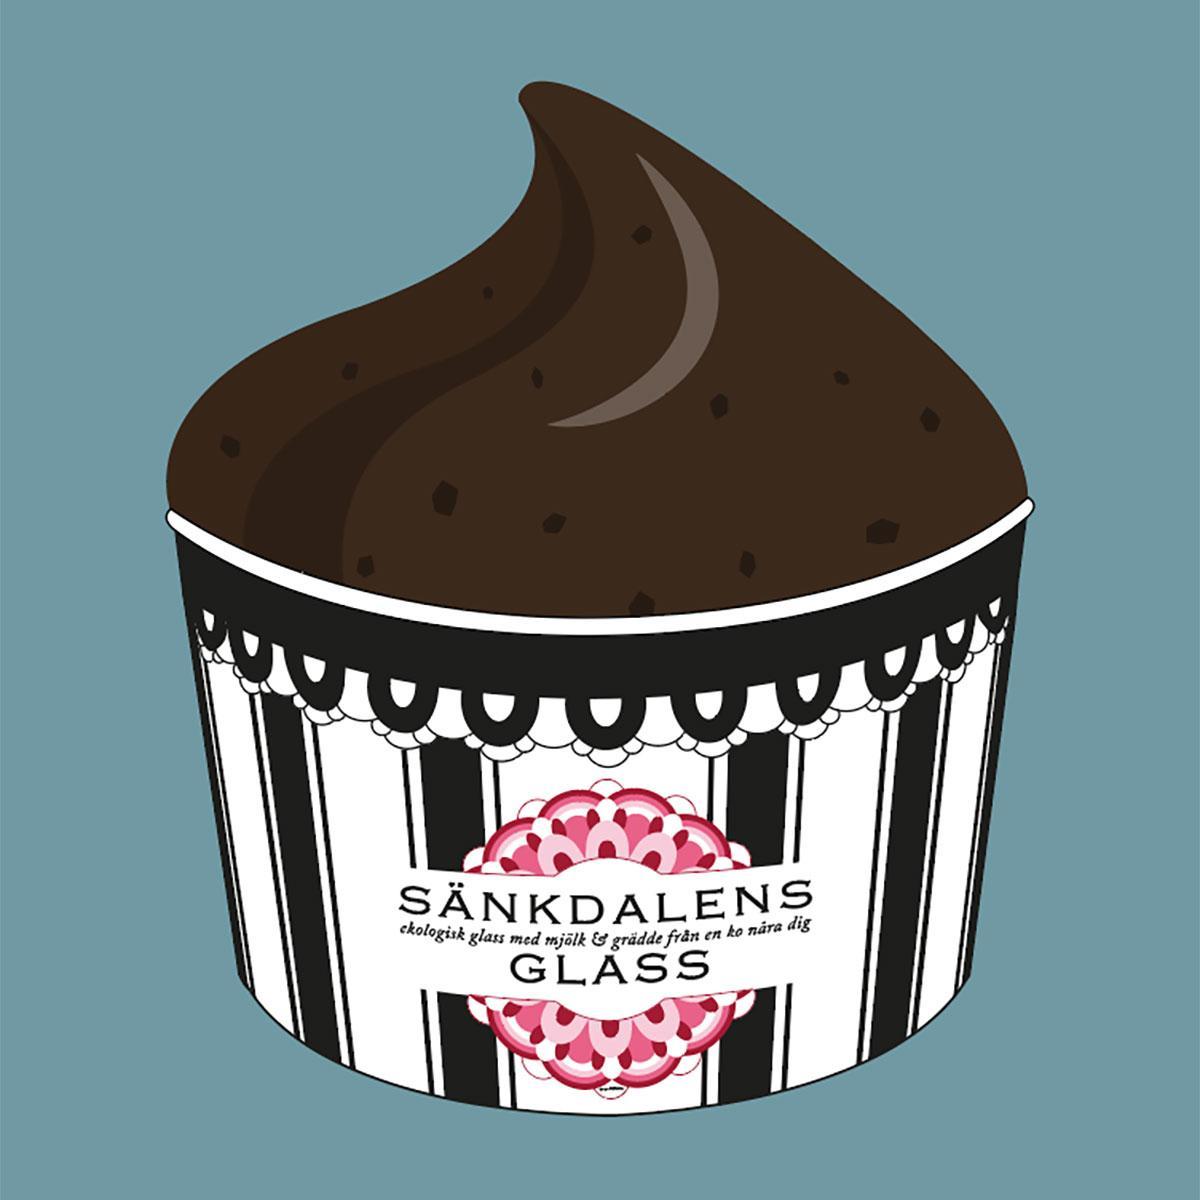 Sänkdalens glass's Chocolate Ice Cream '